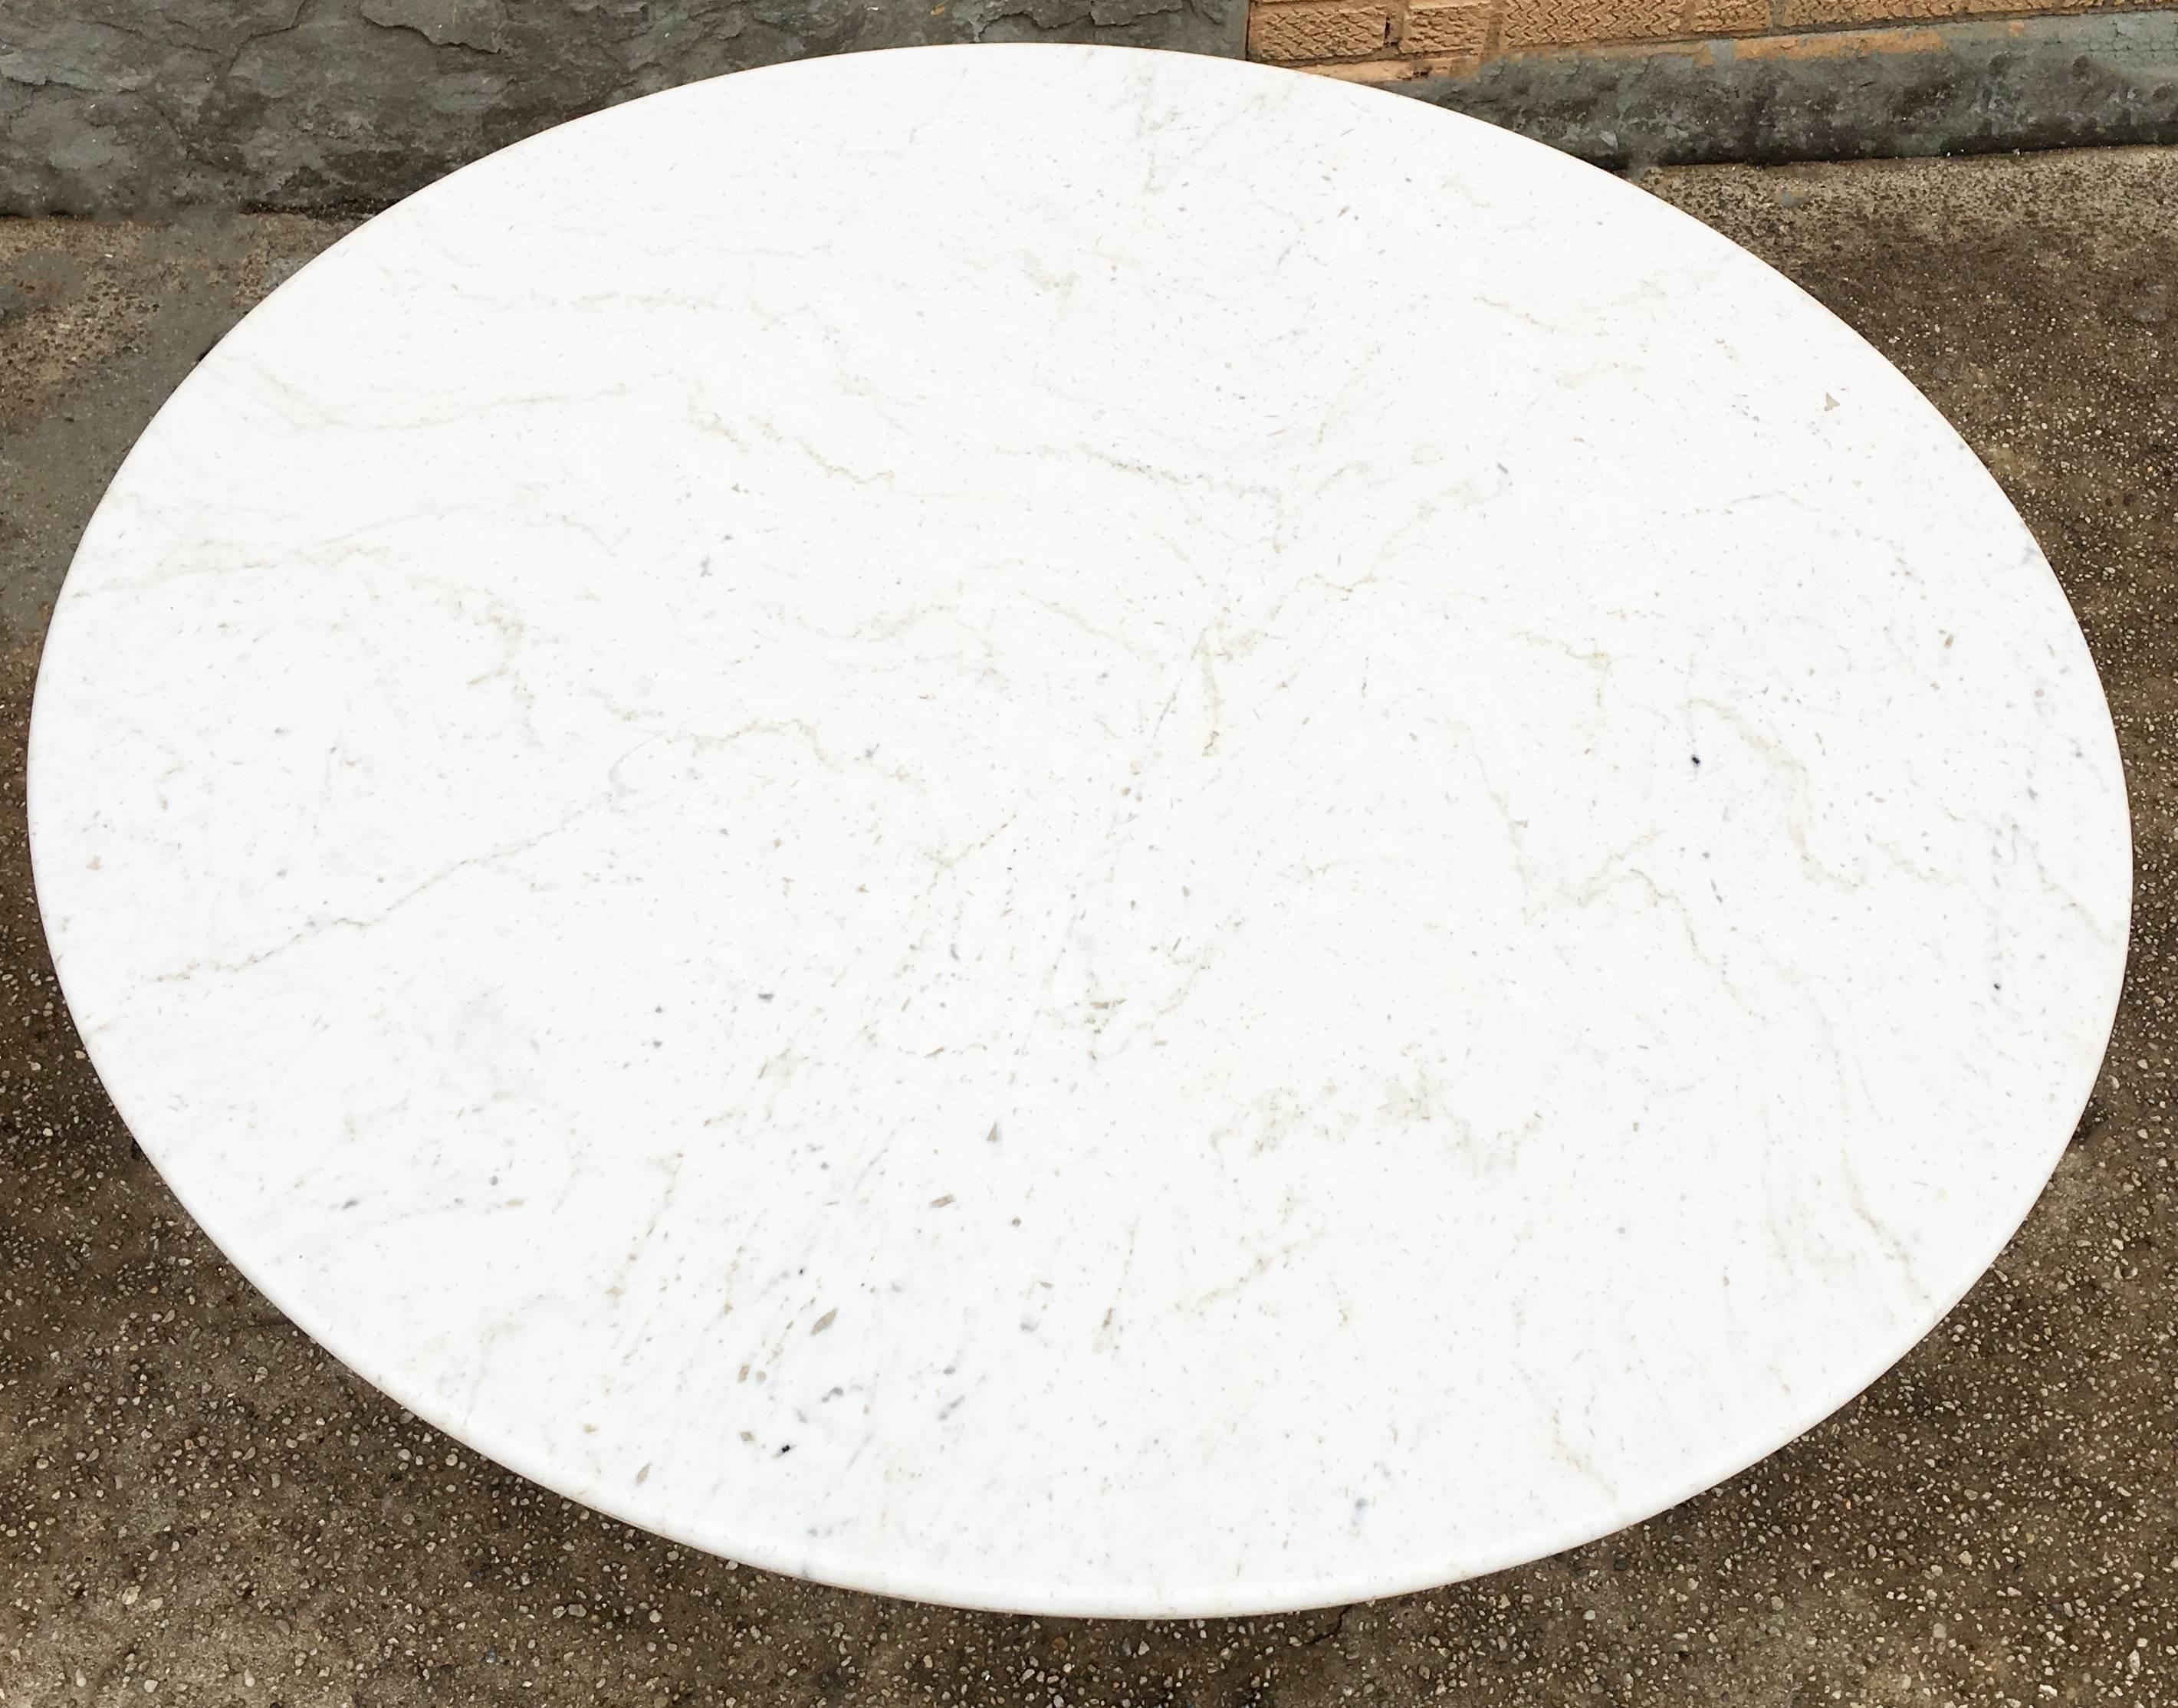 American Eero Saarinen Tulip Base Dining Table with Carrara Marble Top